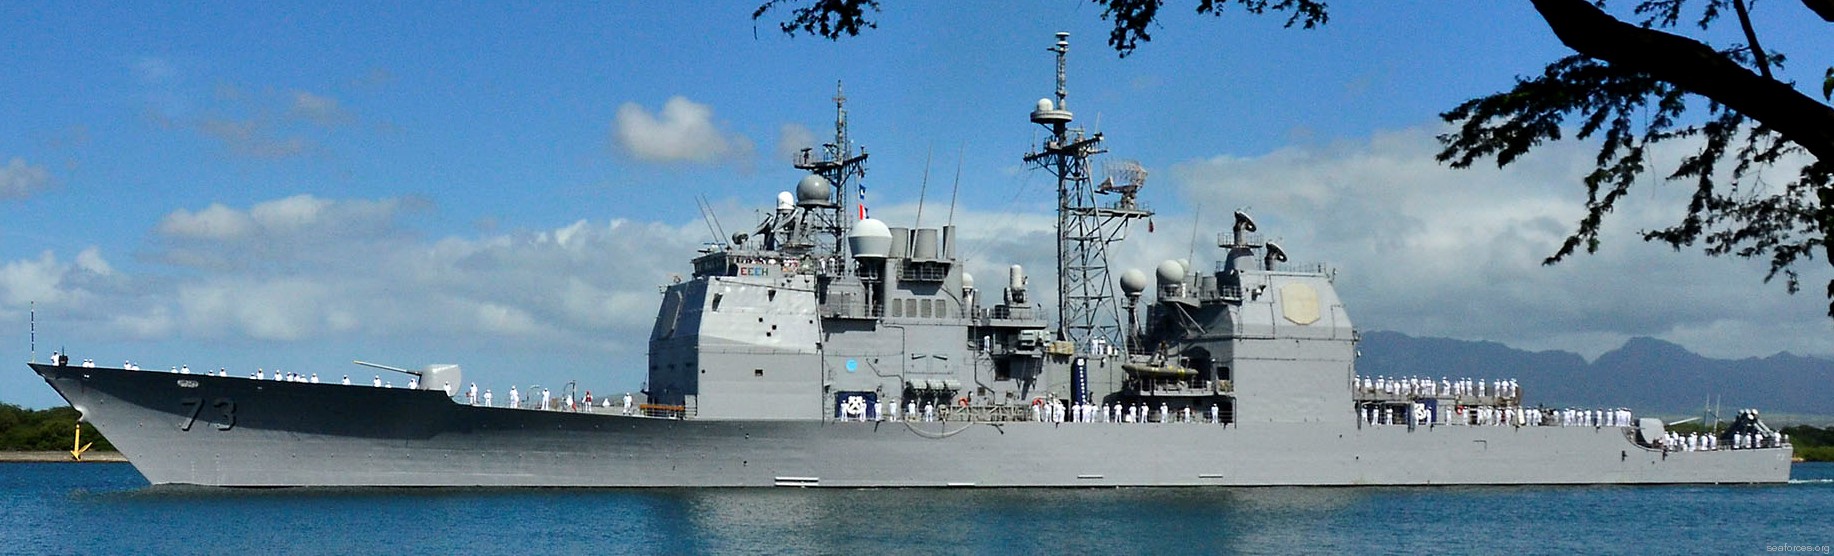 cg-73 uss port royal ticonderoga class guided missile cruiser navy 18